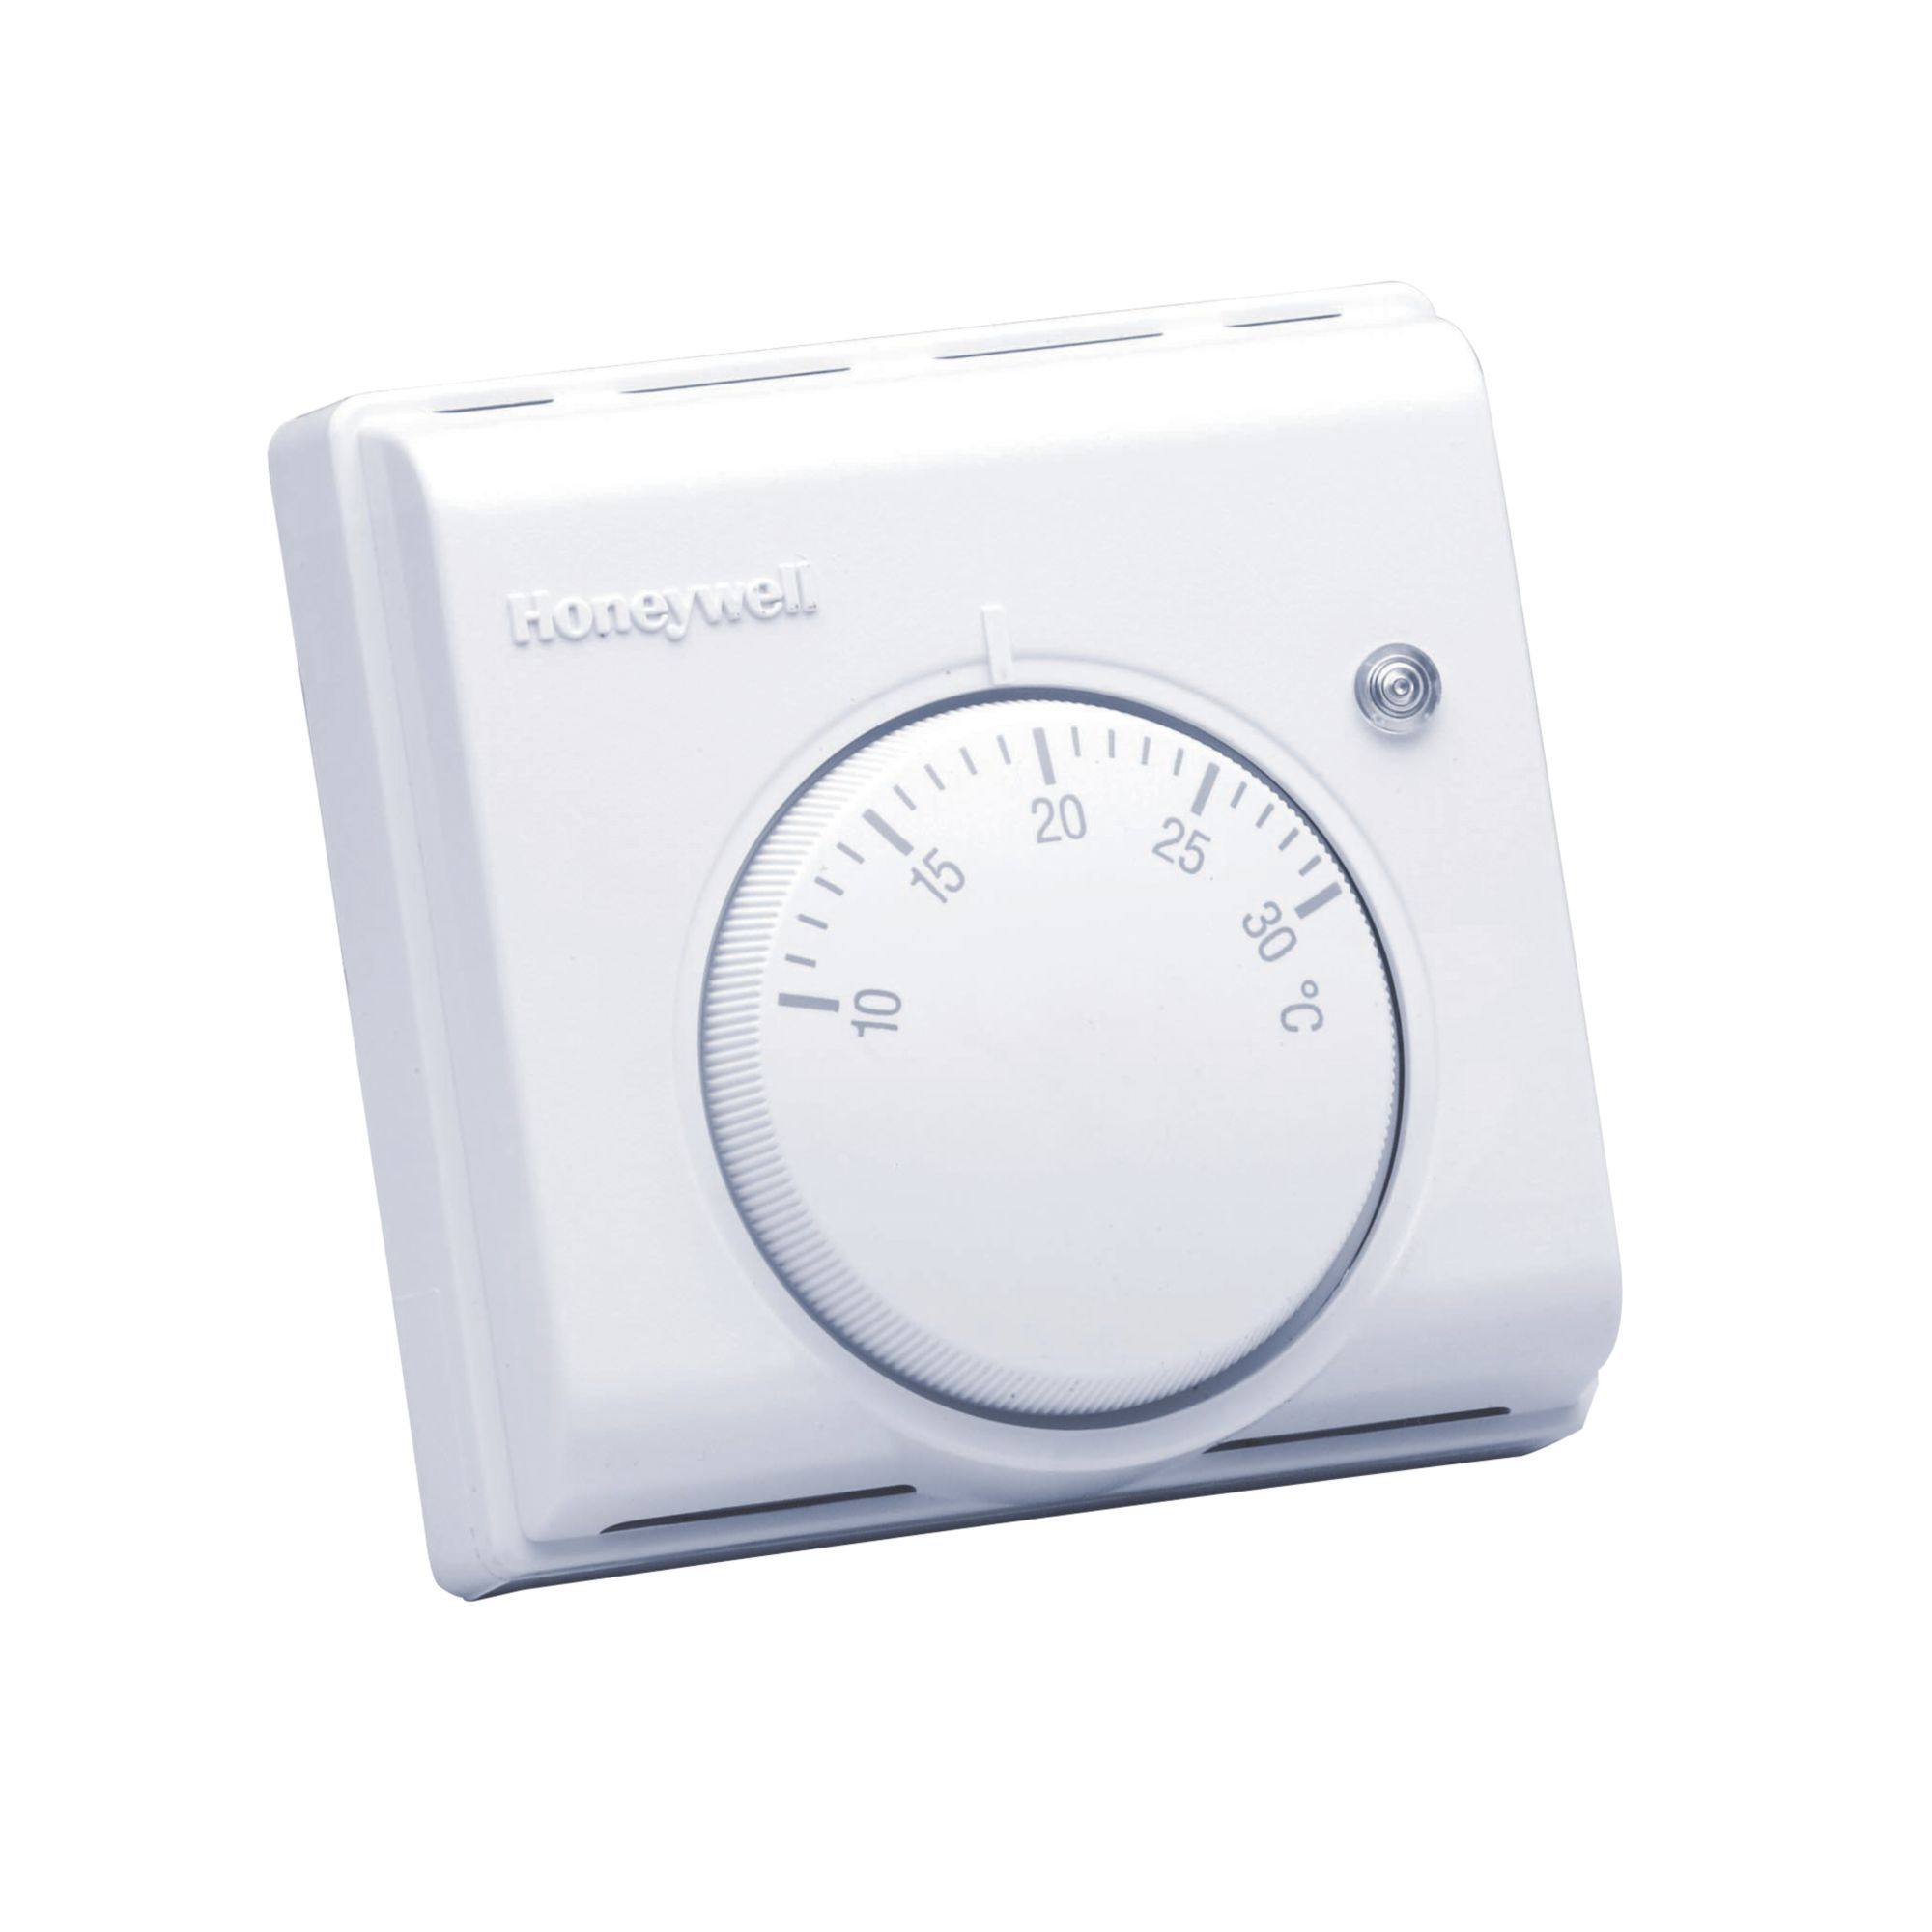 Honeywell Room thermostat